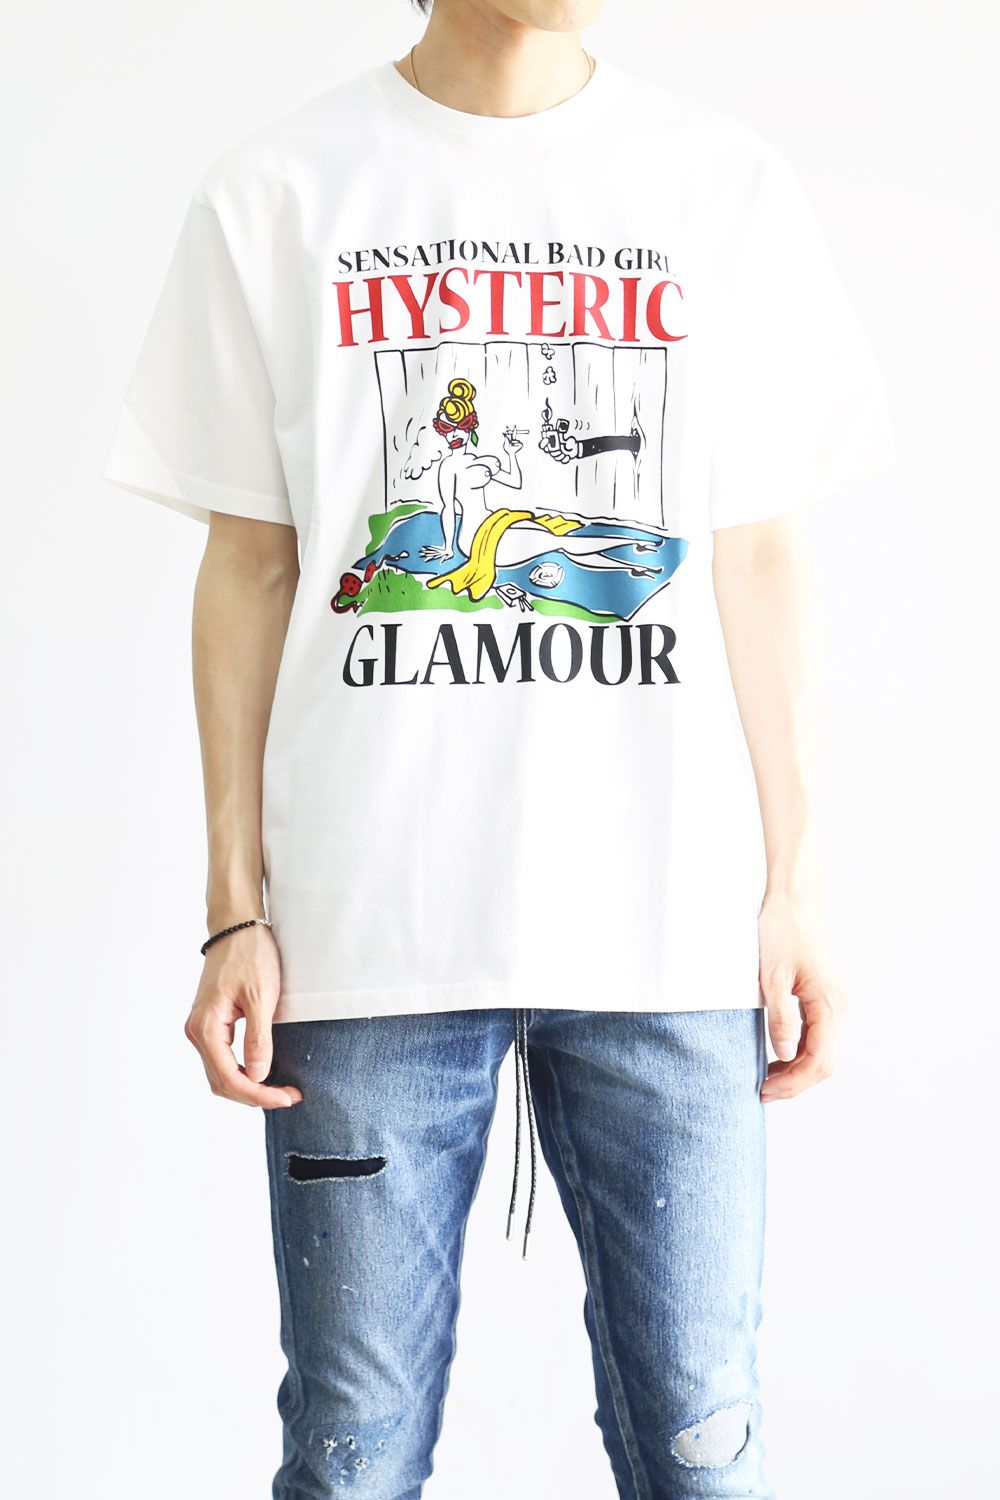 HYSTERIC GLAMOUR - MISS HYSTERIC GARDEN Tシャツ / ブラック | Tempt